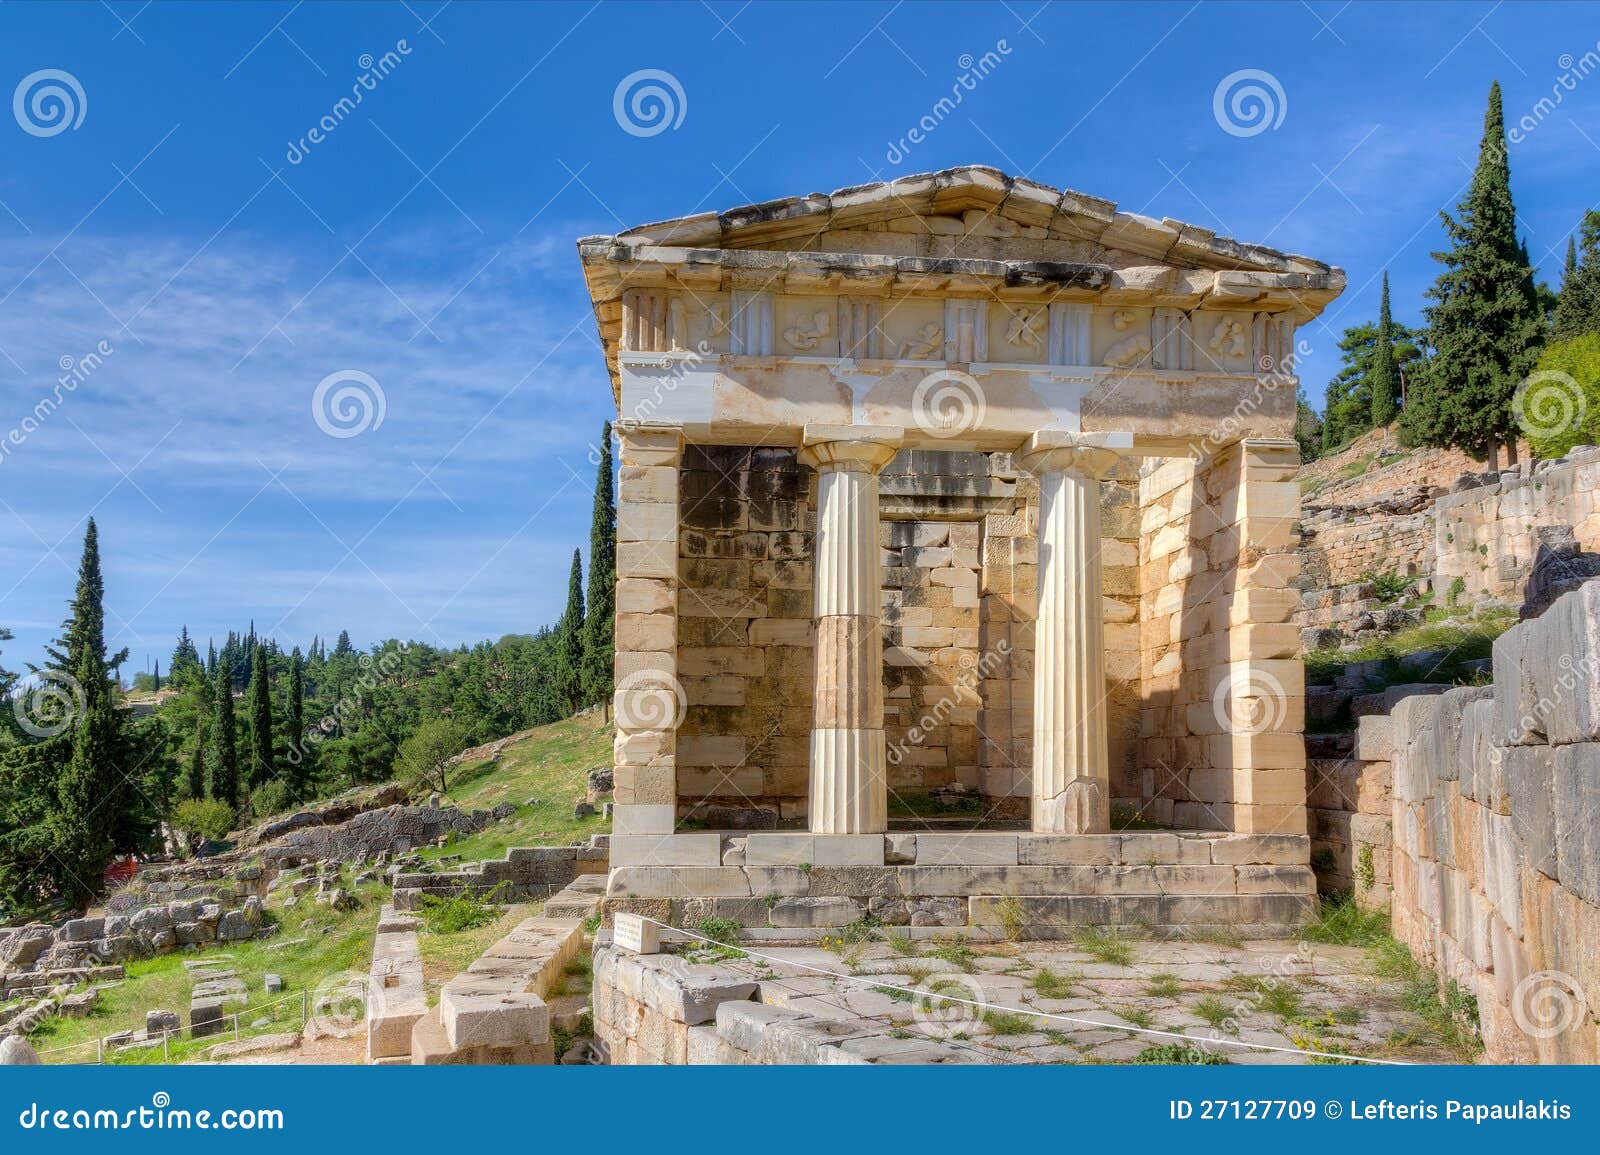 Athenian Treasury, Delphi, Greece Royalty Free Stock ...
